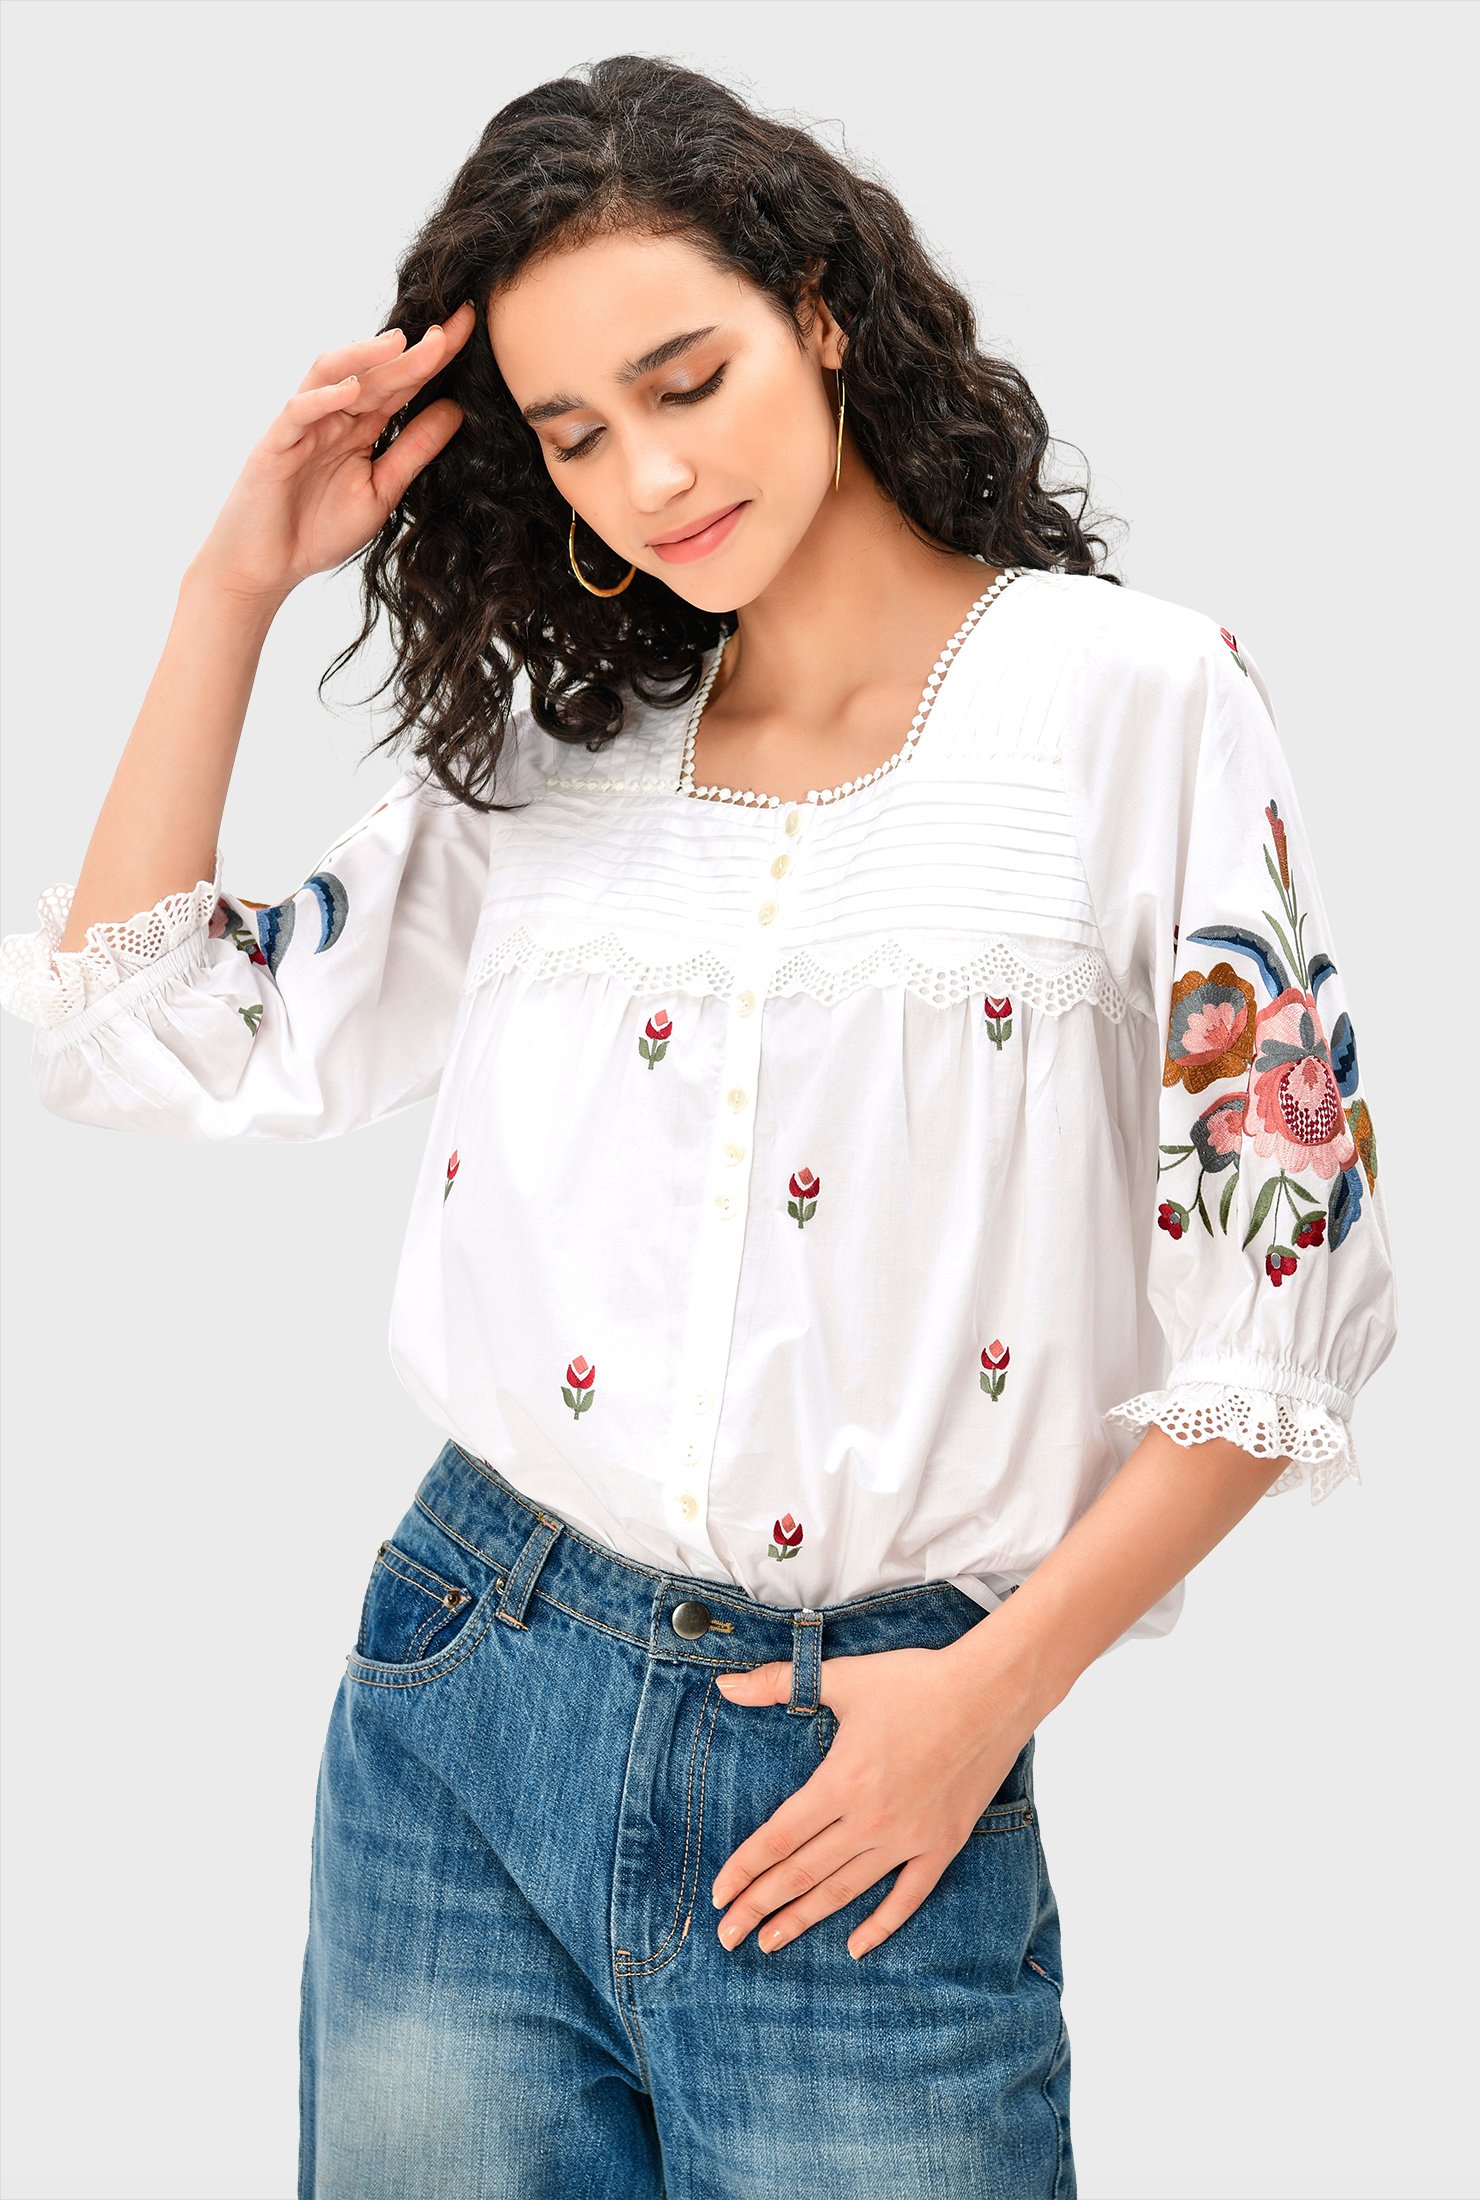 Shop Floral embroidery Egyptian Giza cotton voile lace trim blouse 